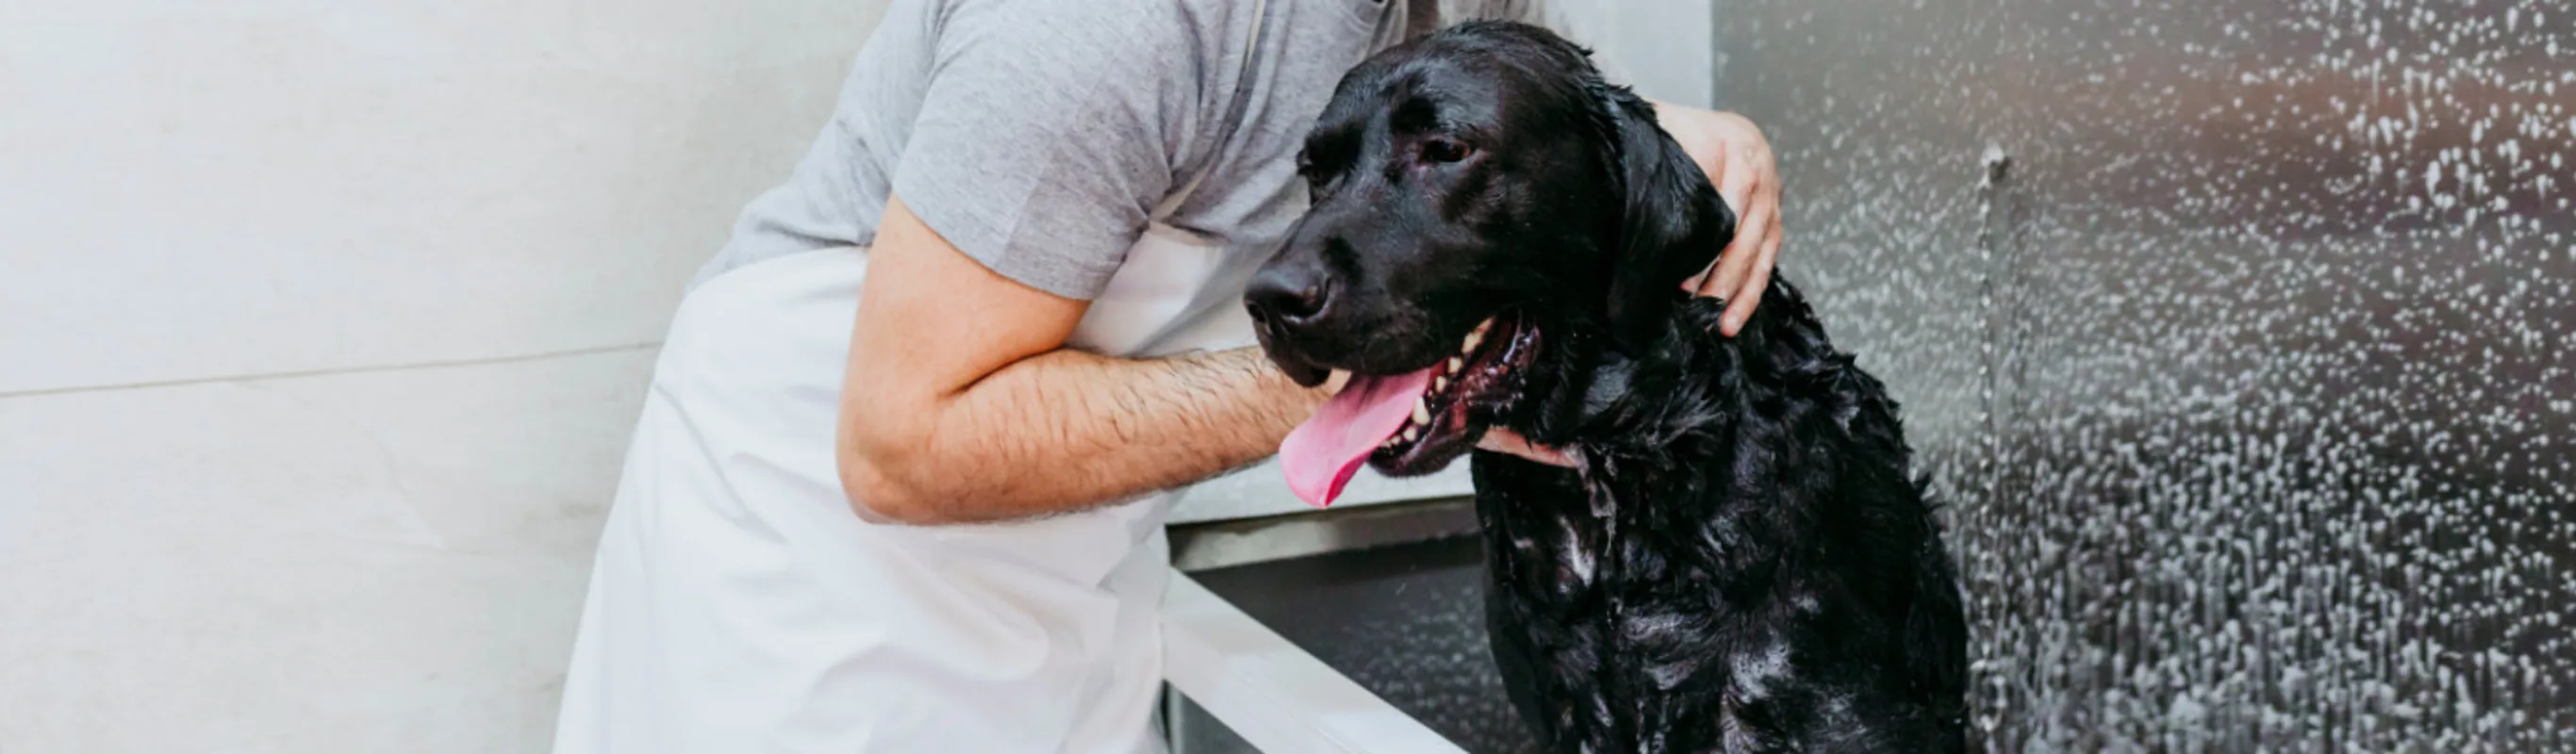 Groomer Washing a Black Labrador Dog